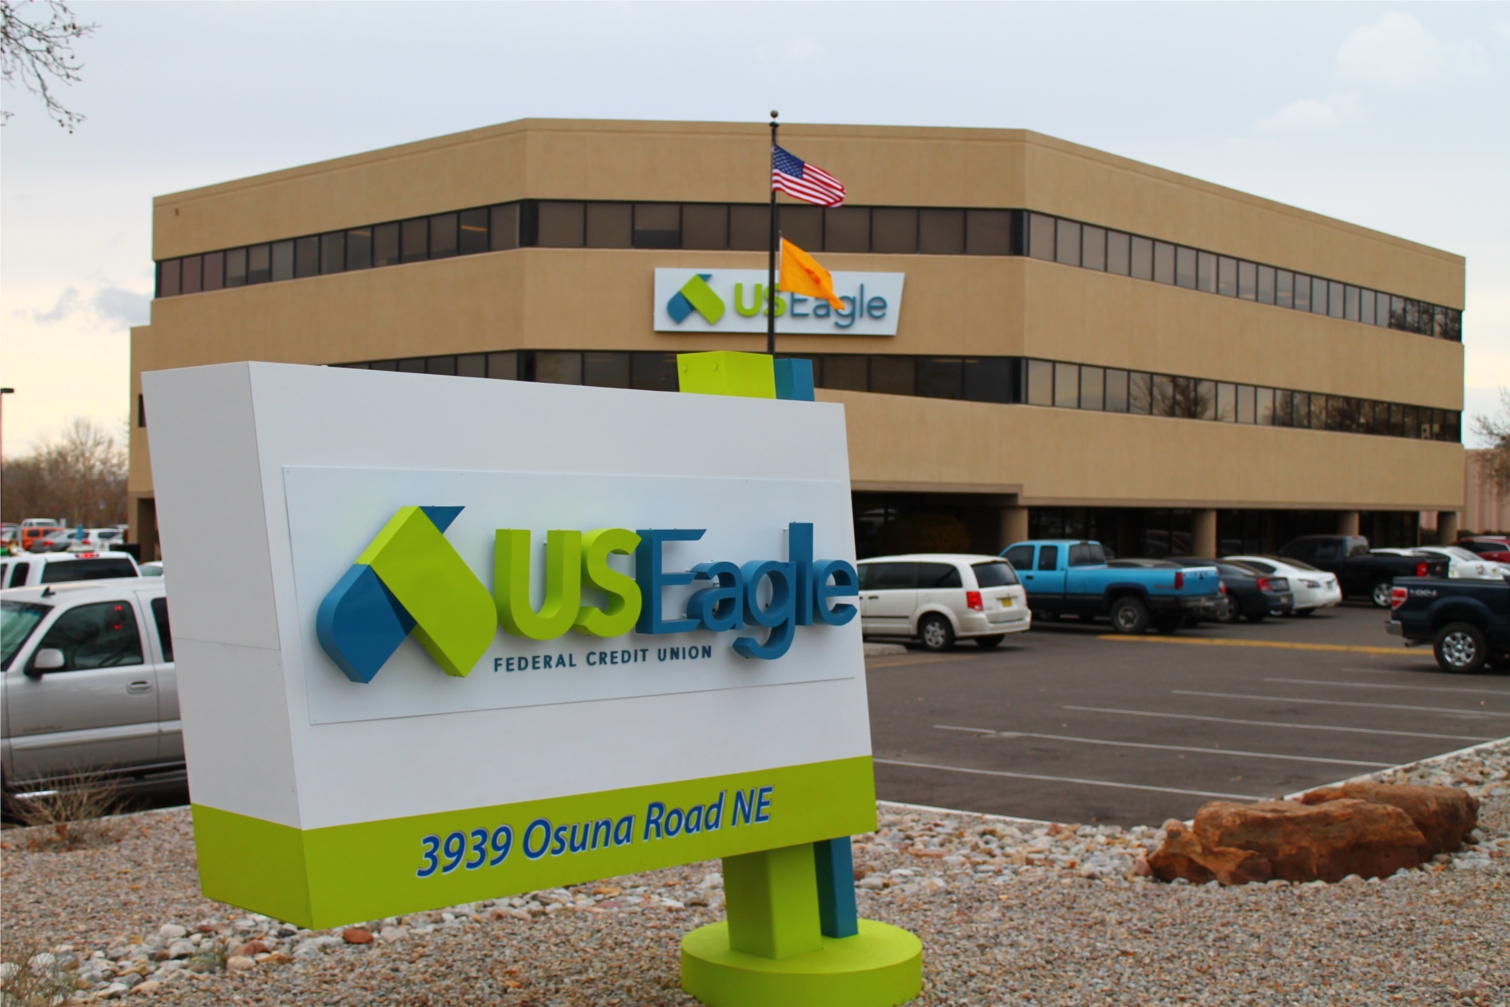 U.S. Eagle Federal Credit Union has nine branches in Albuquerque, Bernalillo, Santa Fe and Farmington with 250 employees. Photo of administration headquarters located at 3939 Osuna Road NE, Albuquerque, NM.